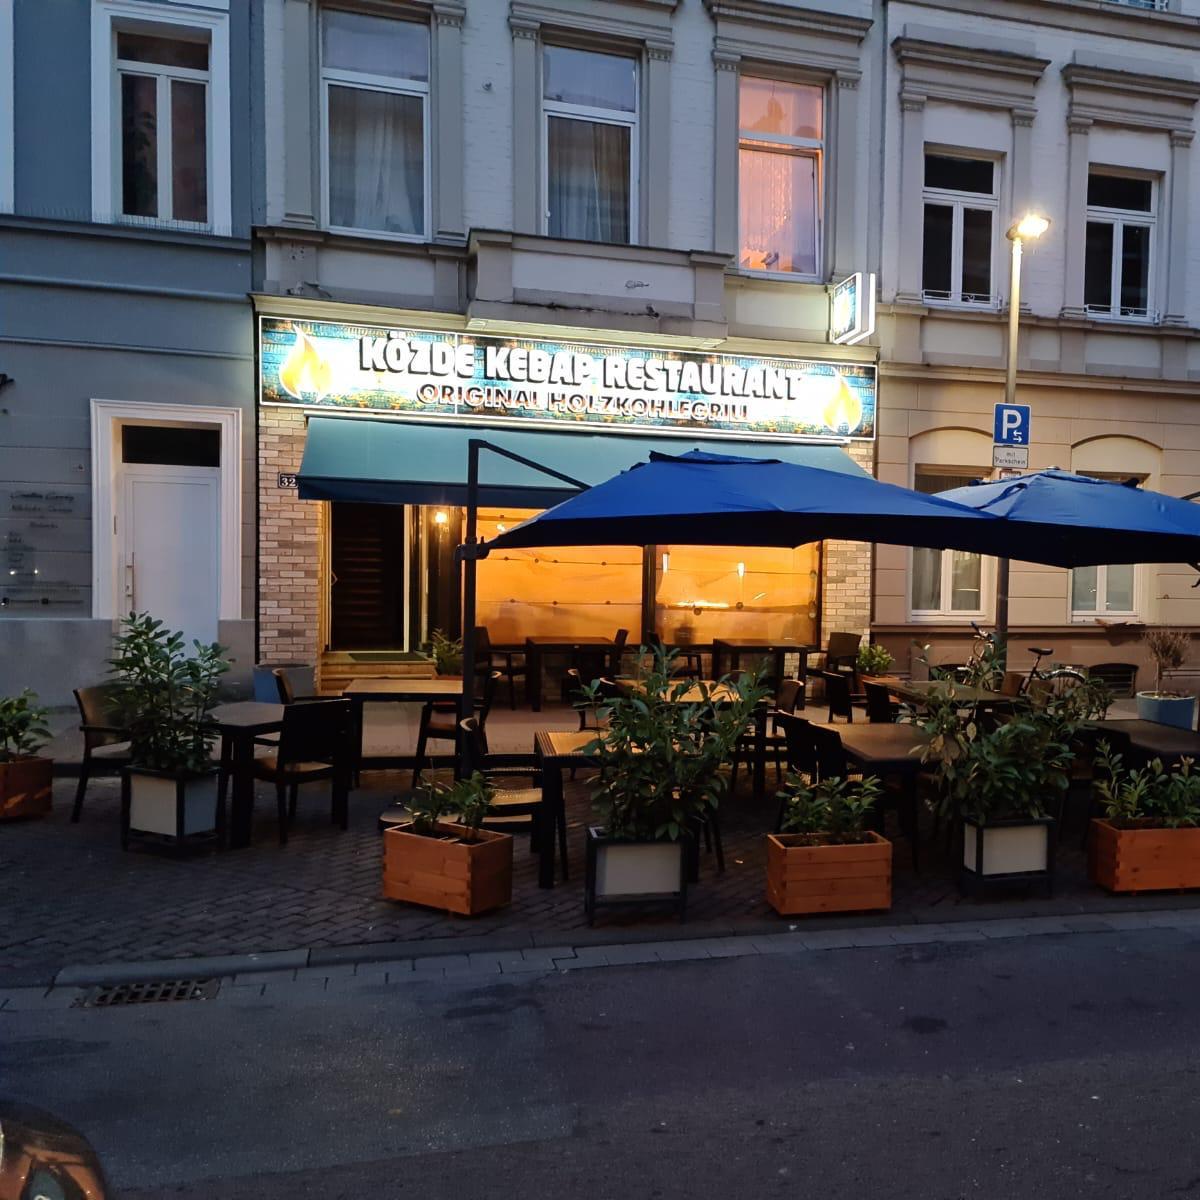 Restaurant "Közde Kebab Restaurant" in Aachen